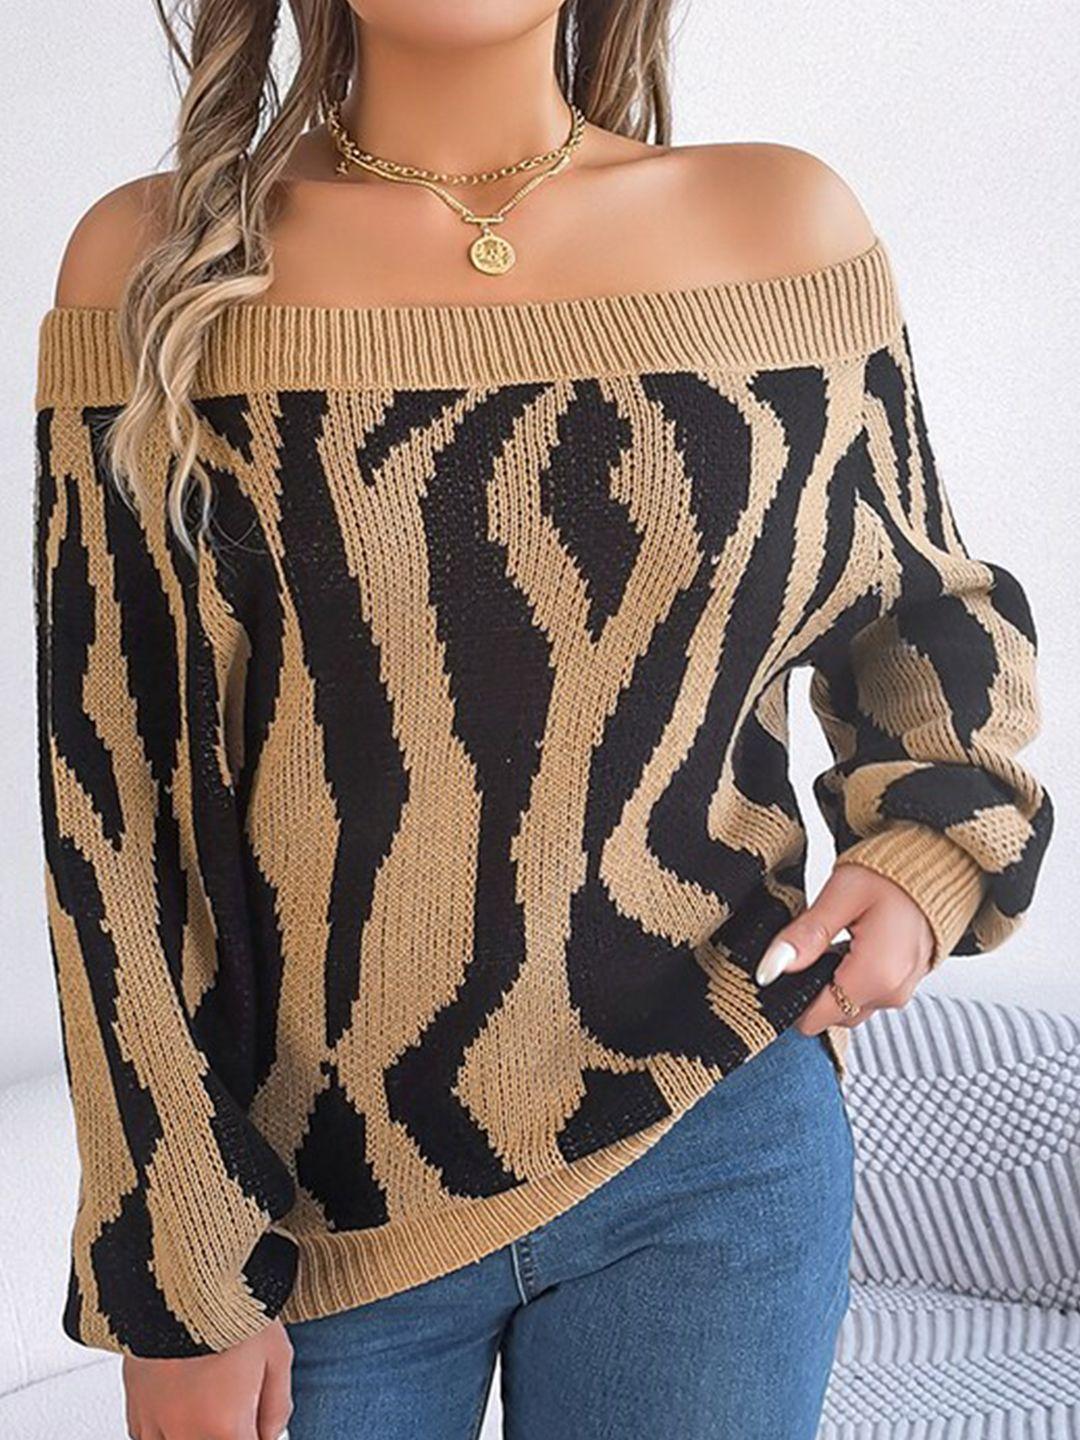 stylecast khaki & black animal printed off-shoulder acrylic pullover sweater